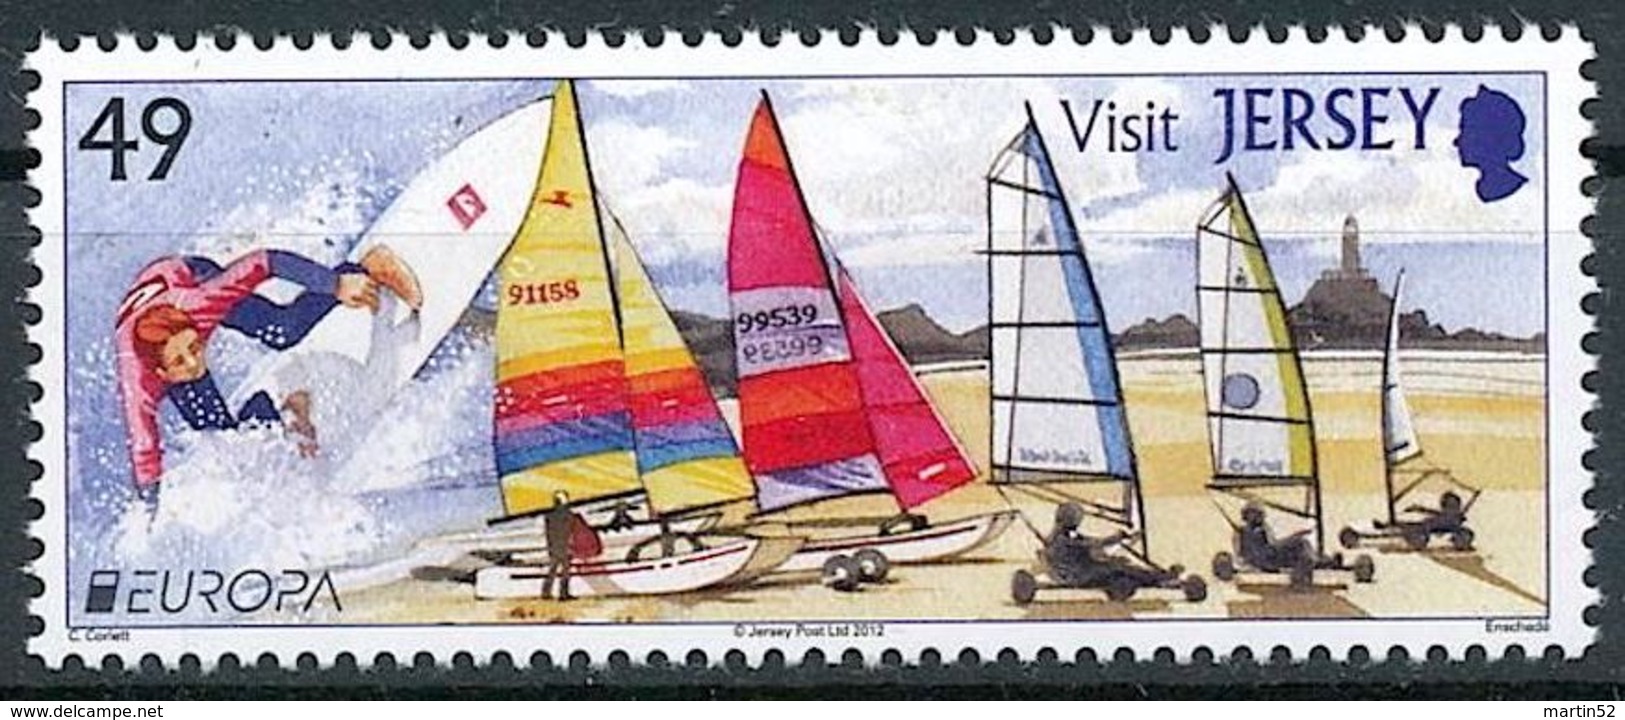 Jersey 2012: "Surfing, Sailing & Windsurfing" Michel-No. 1615 ** MNH - START BELOW POSTAL FACE VALUE (£ 0.49) - Wasserski